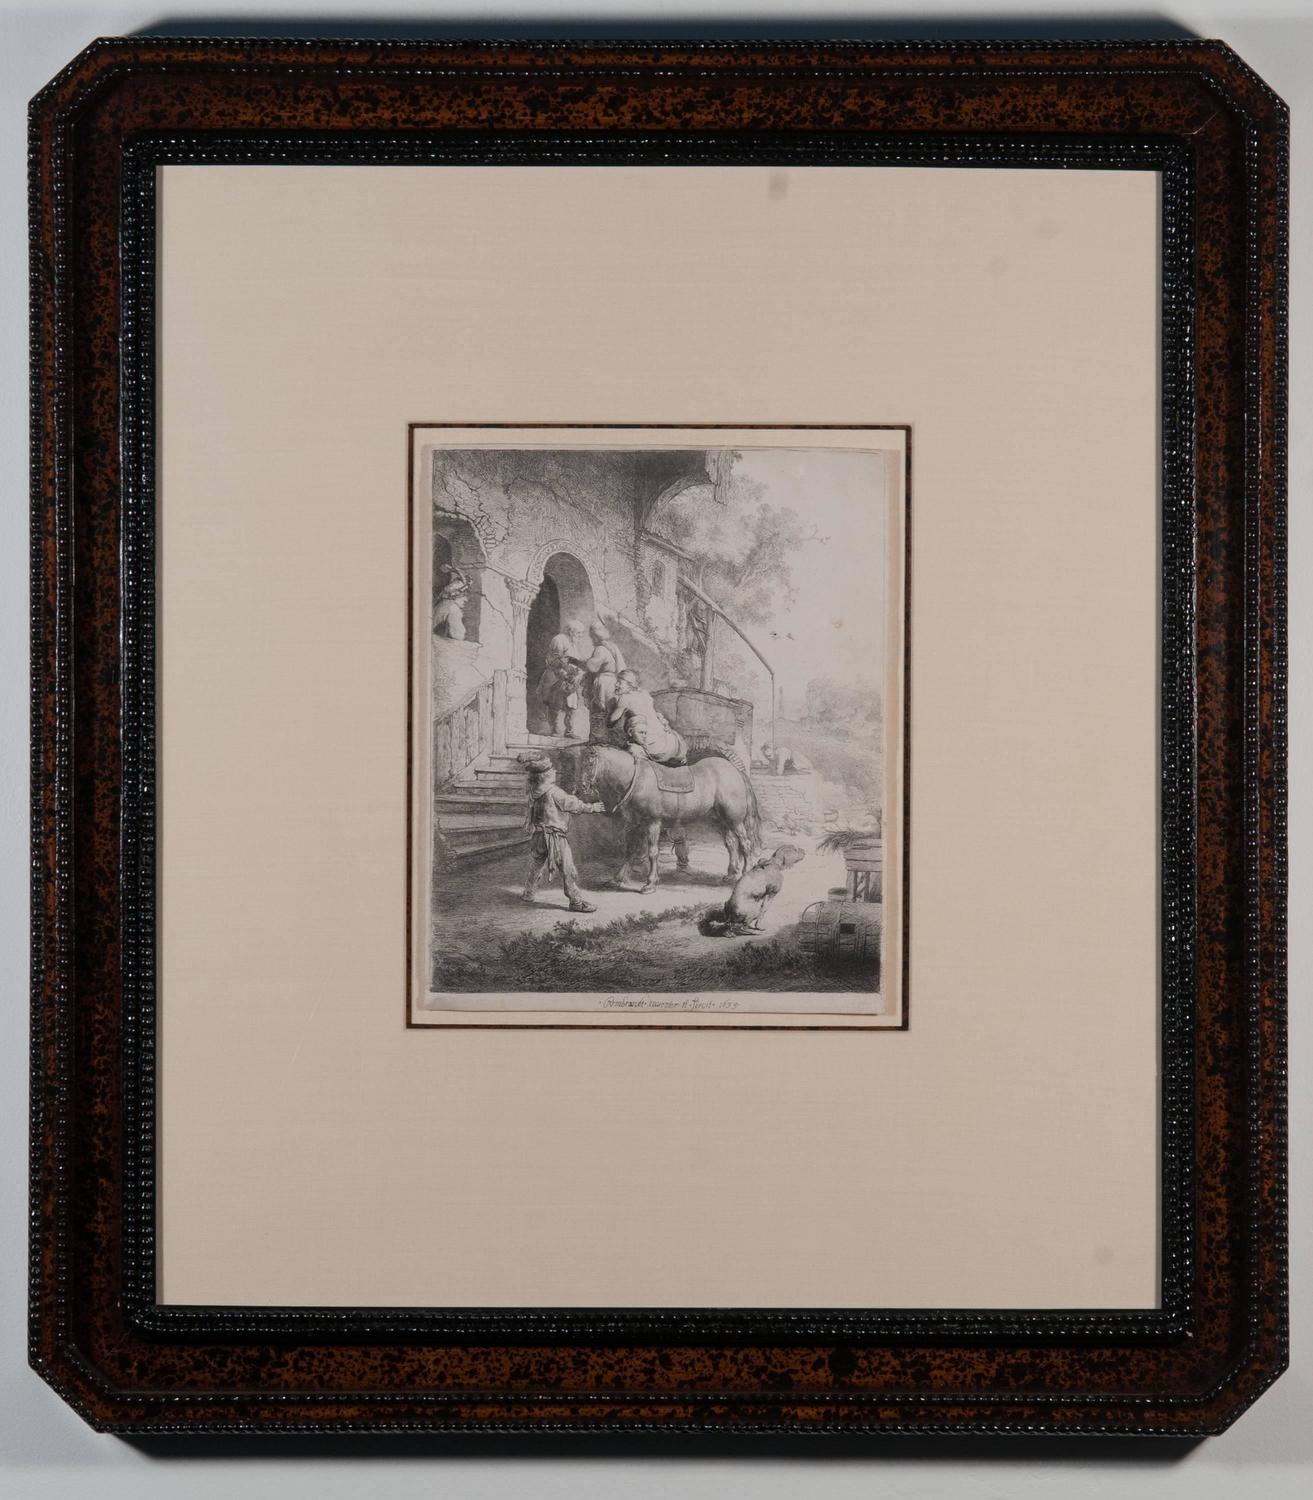 Rembrandt van Rijn - The Good Samaritan For Sale at 1stdibs